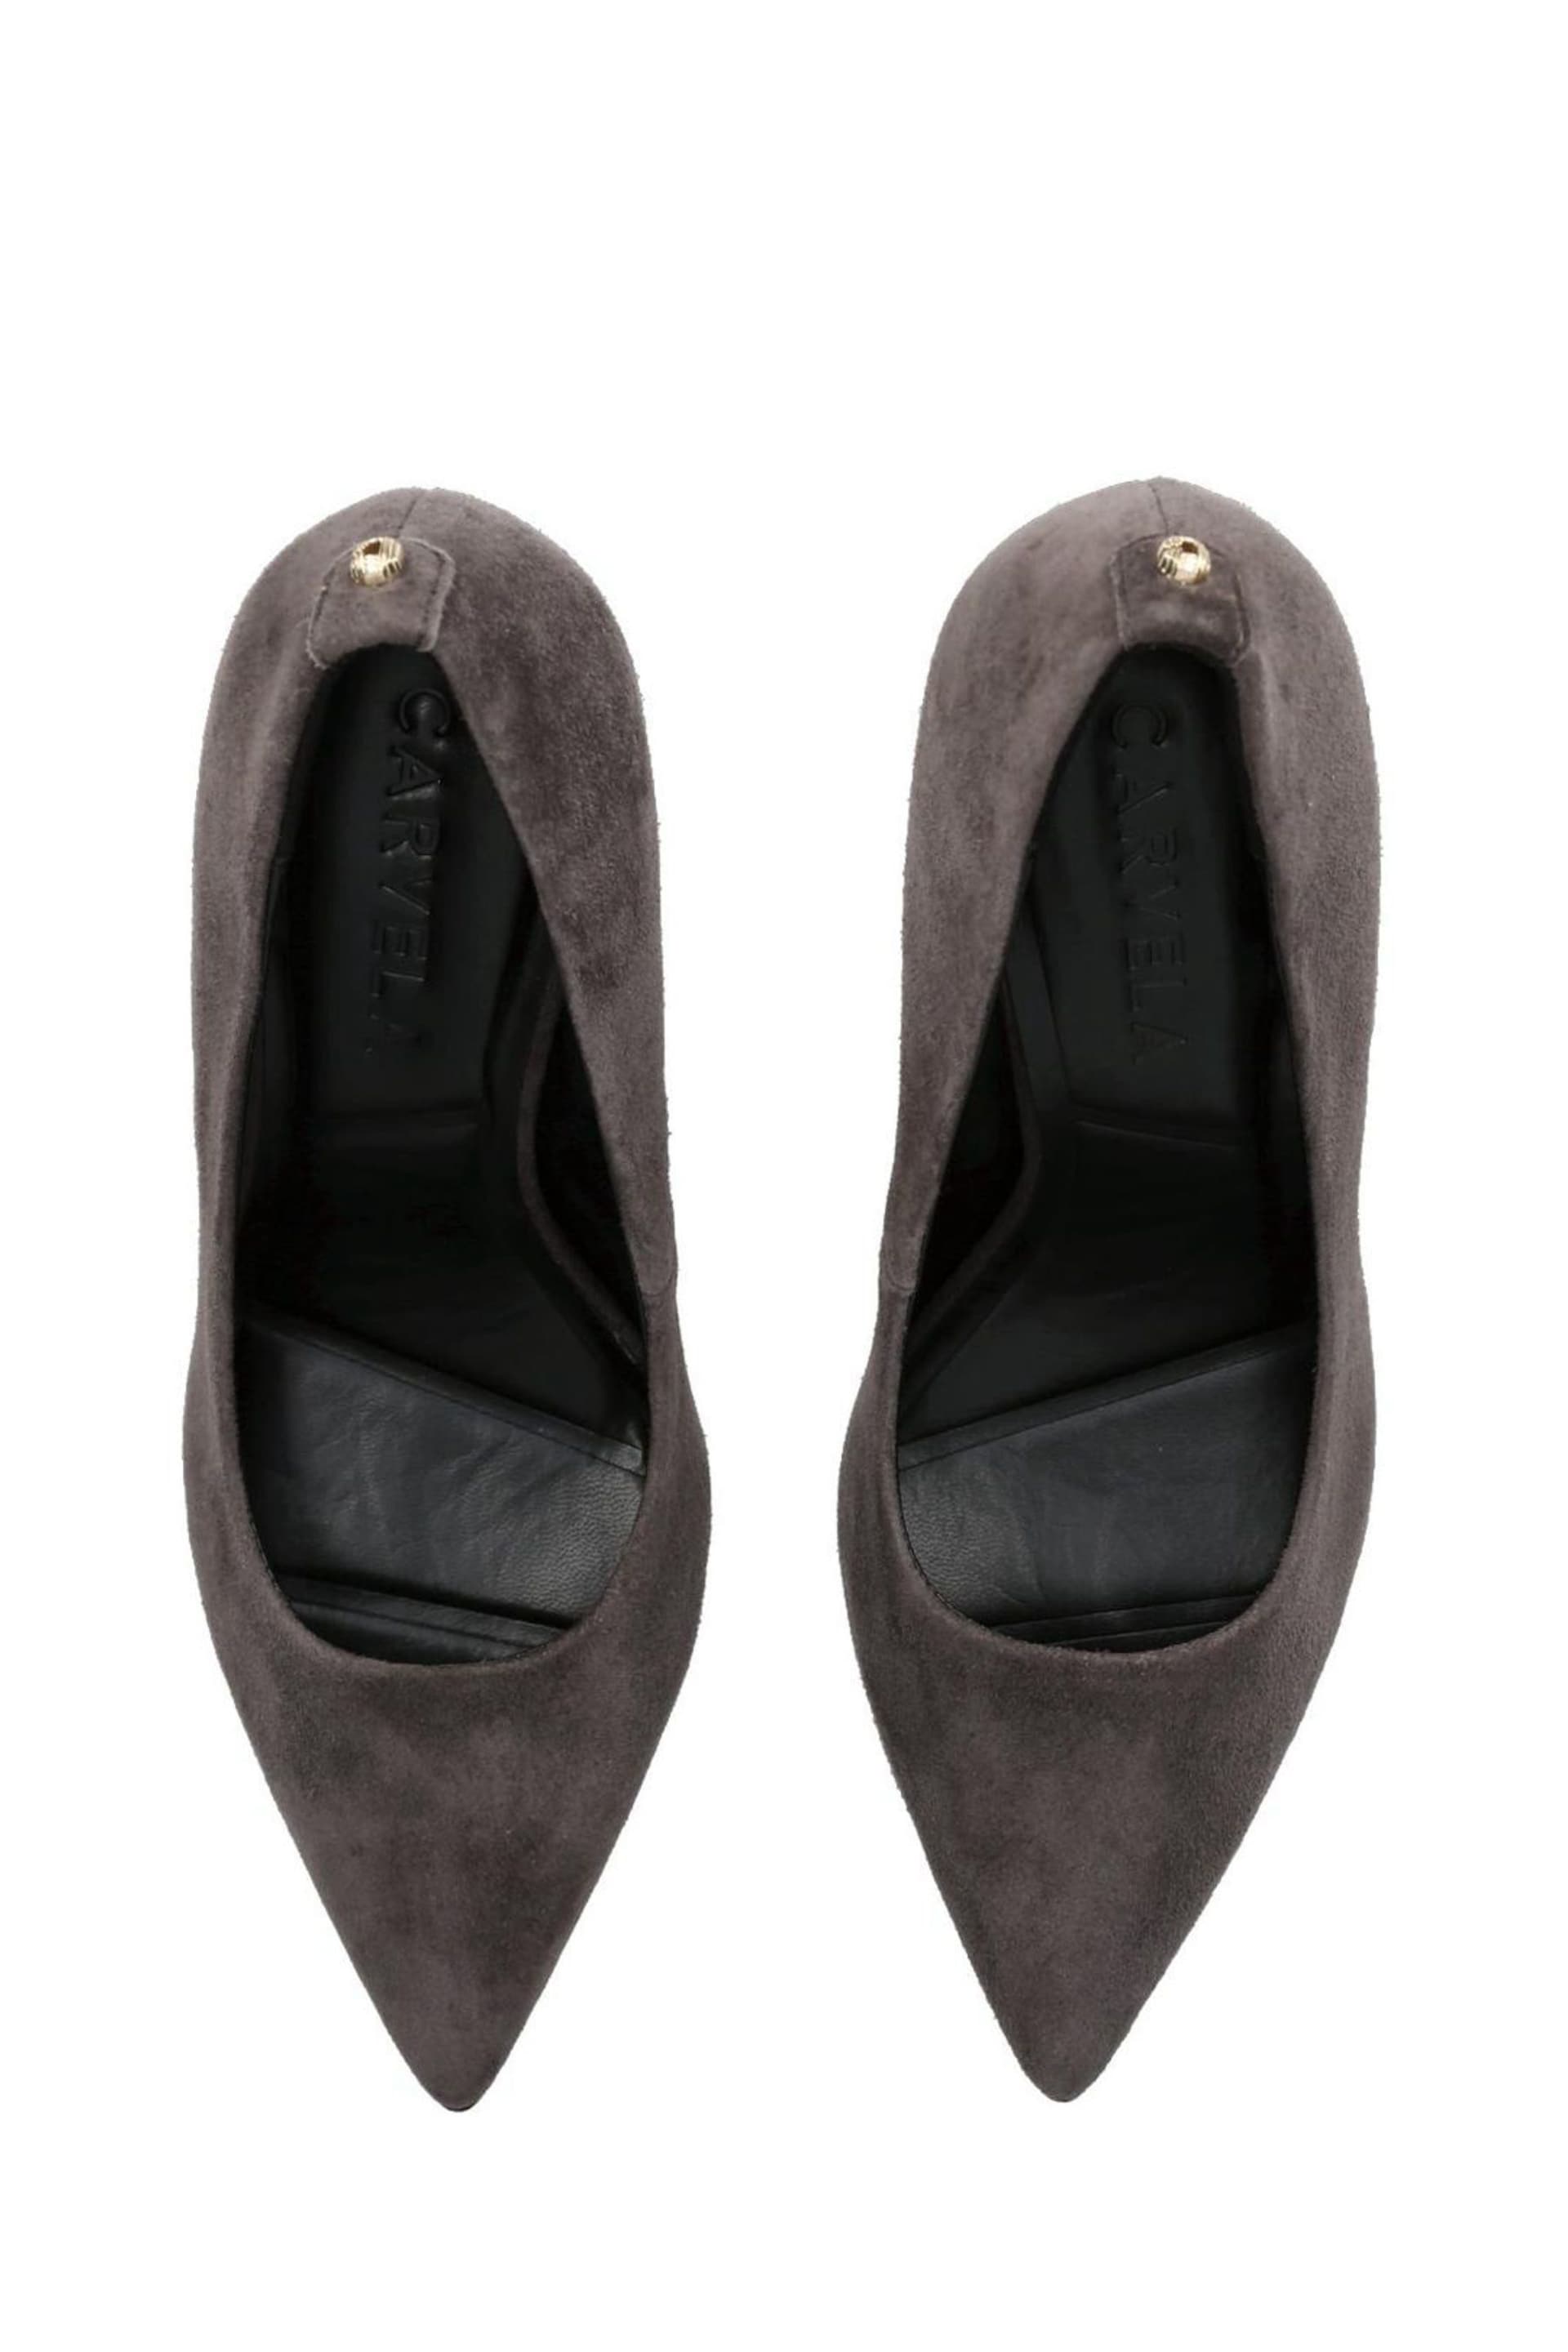 Carvela Grey Classique 90 Shoes - Image 4 of 5